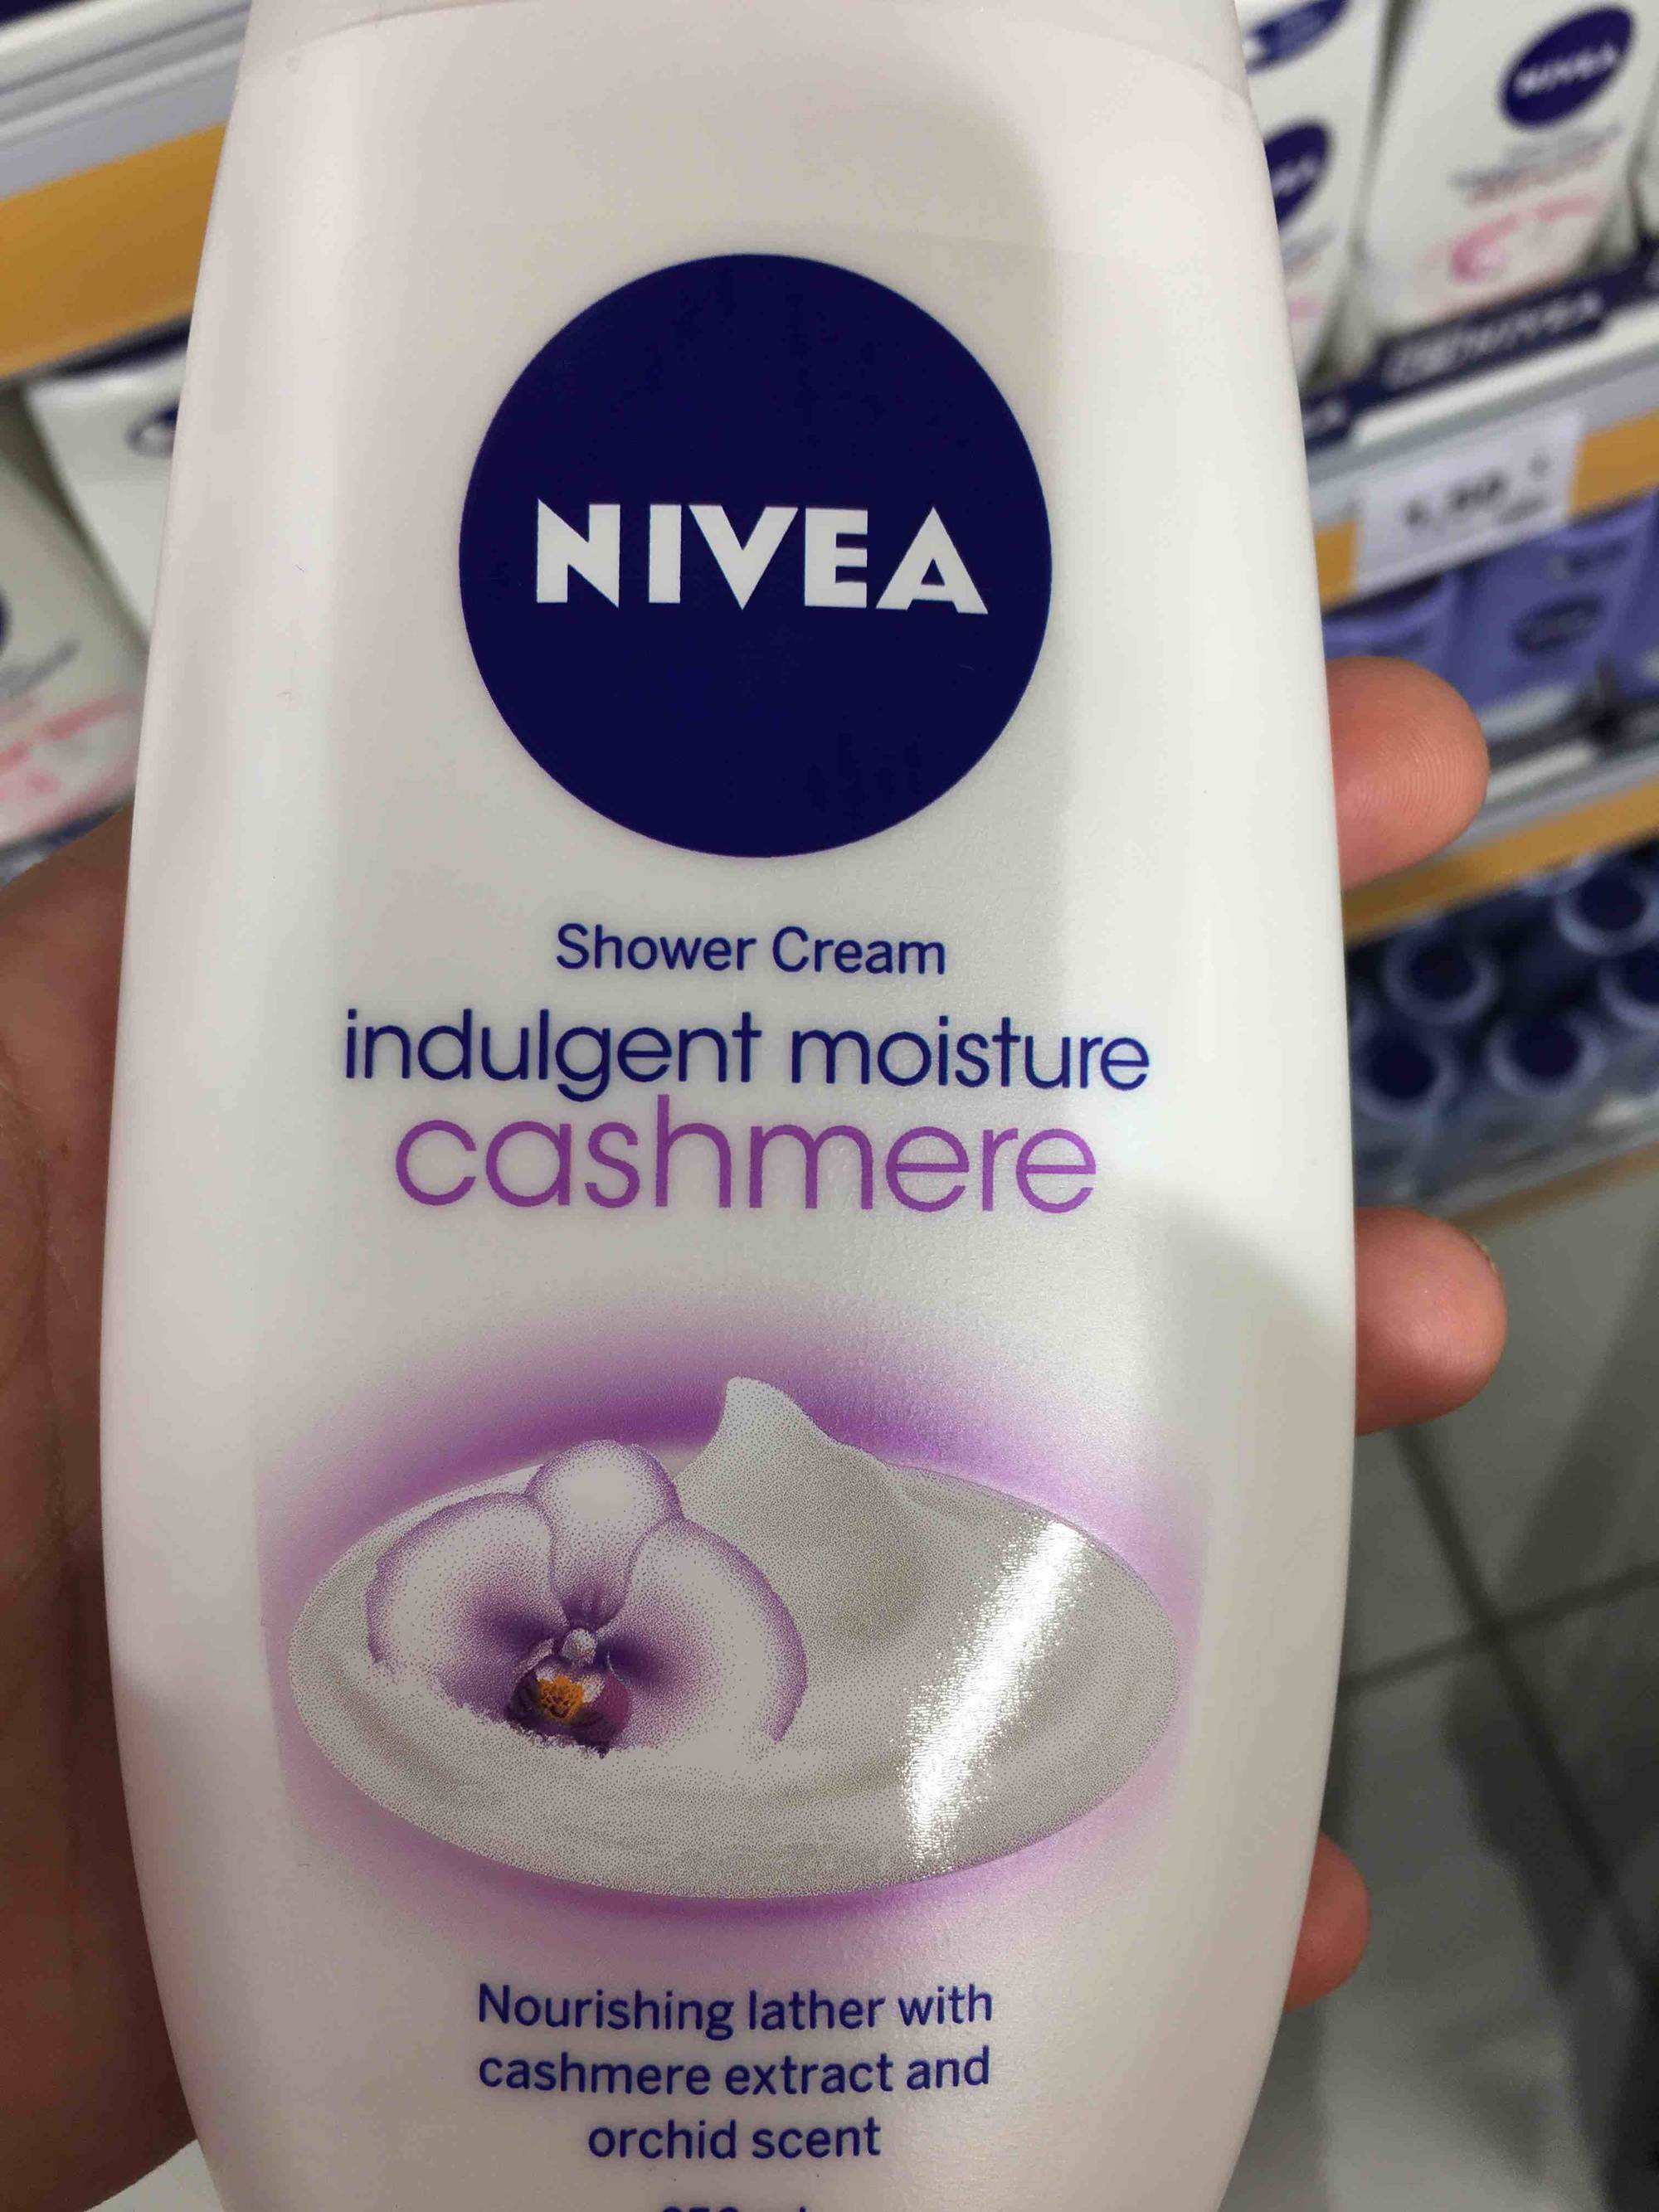 NIVEA - Indulgent moisture cashmere - Shower cream